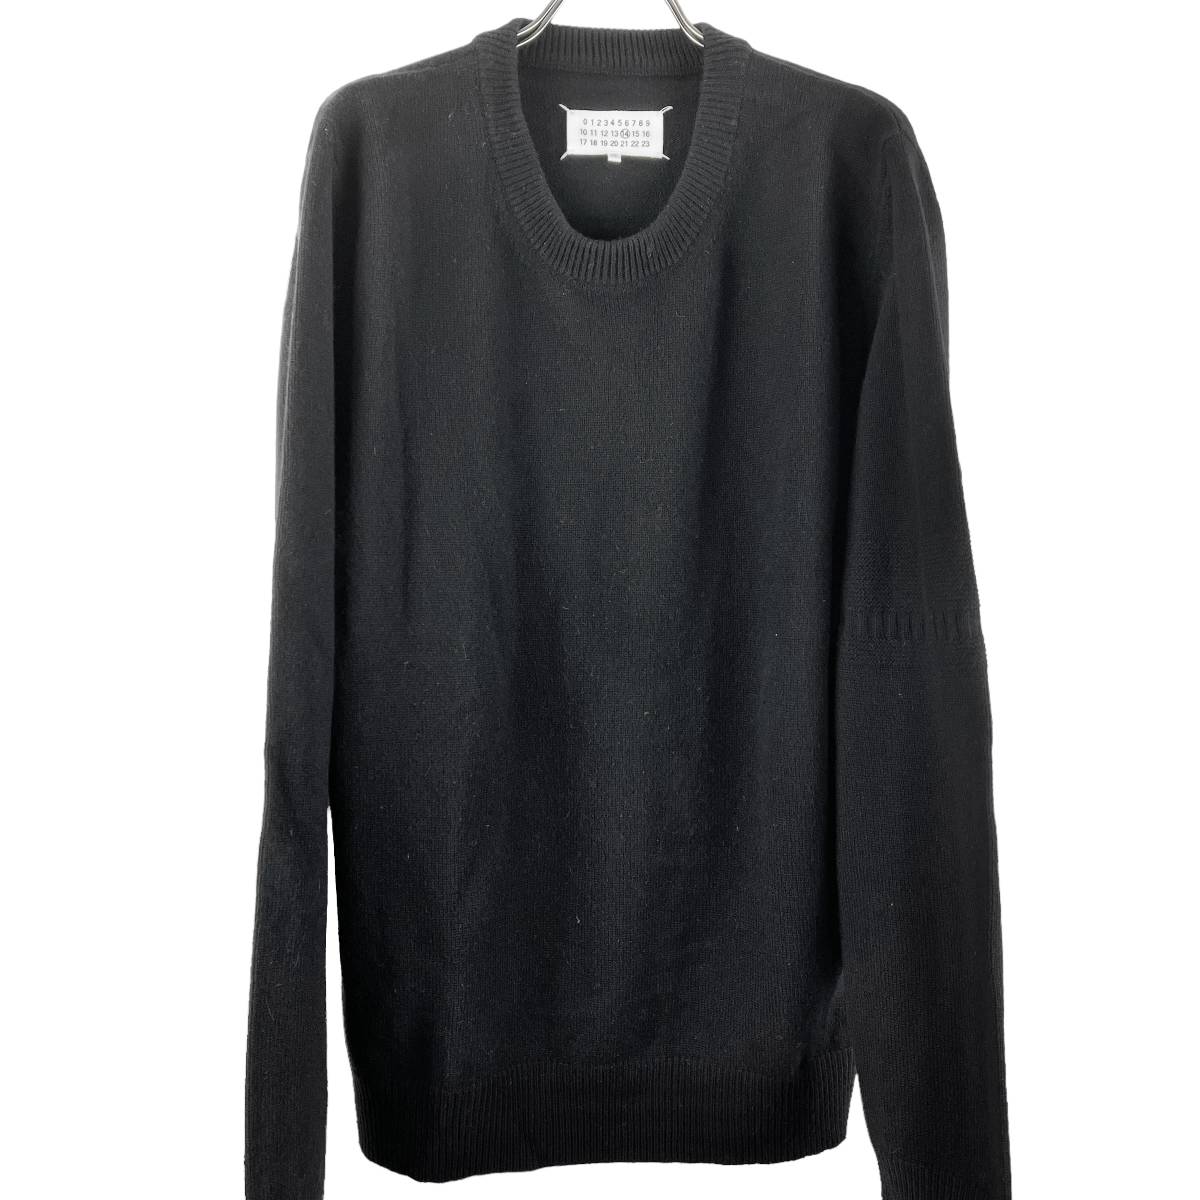 Maison Margiela (メゾン マルジェラ) Casual Fit Longsleeve Knit T Shirt 19AW (black)